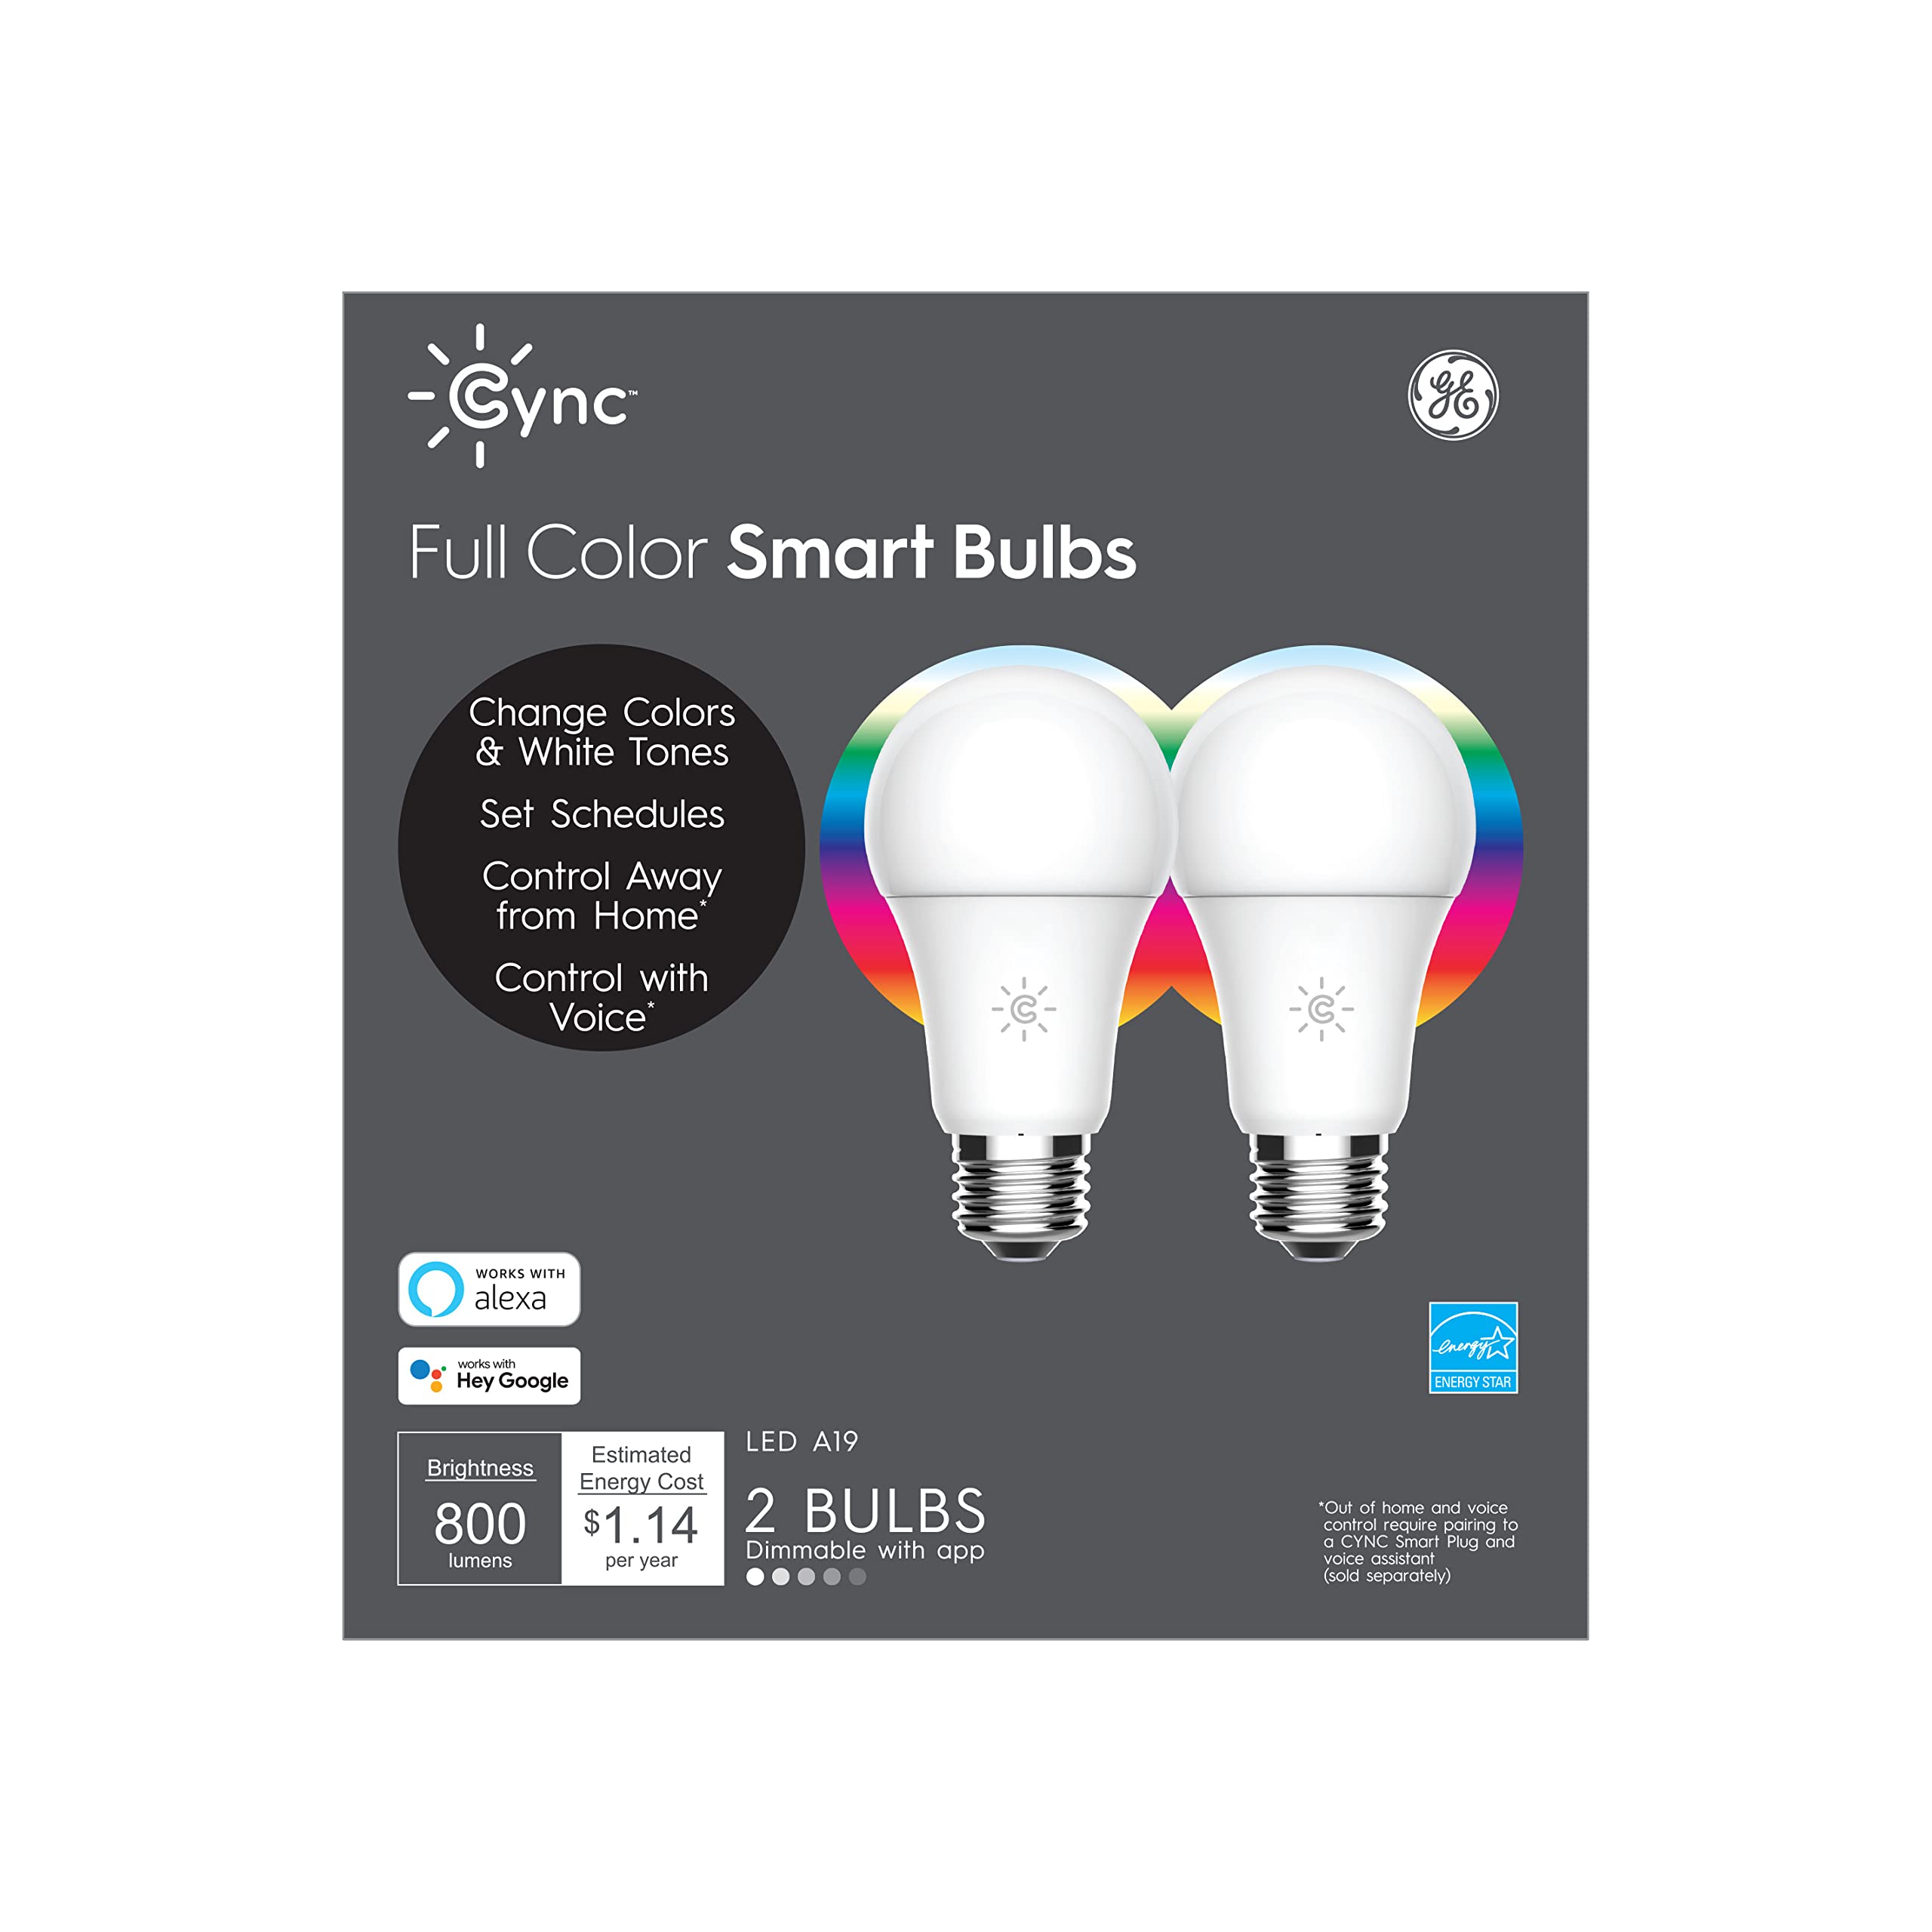 (2-pk) GE CYNC Smart LED Bluetooth Smart Light Bulbs $13.08 + Free Shipping w/ Prime or on $25+